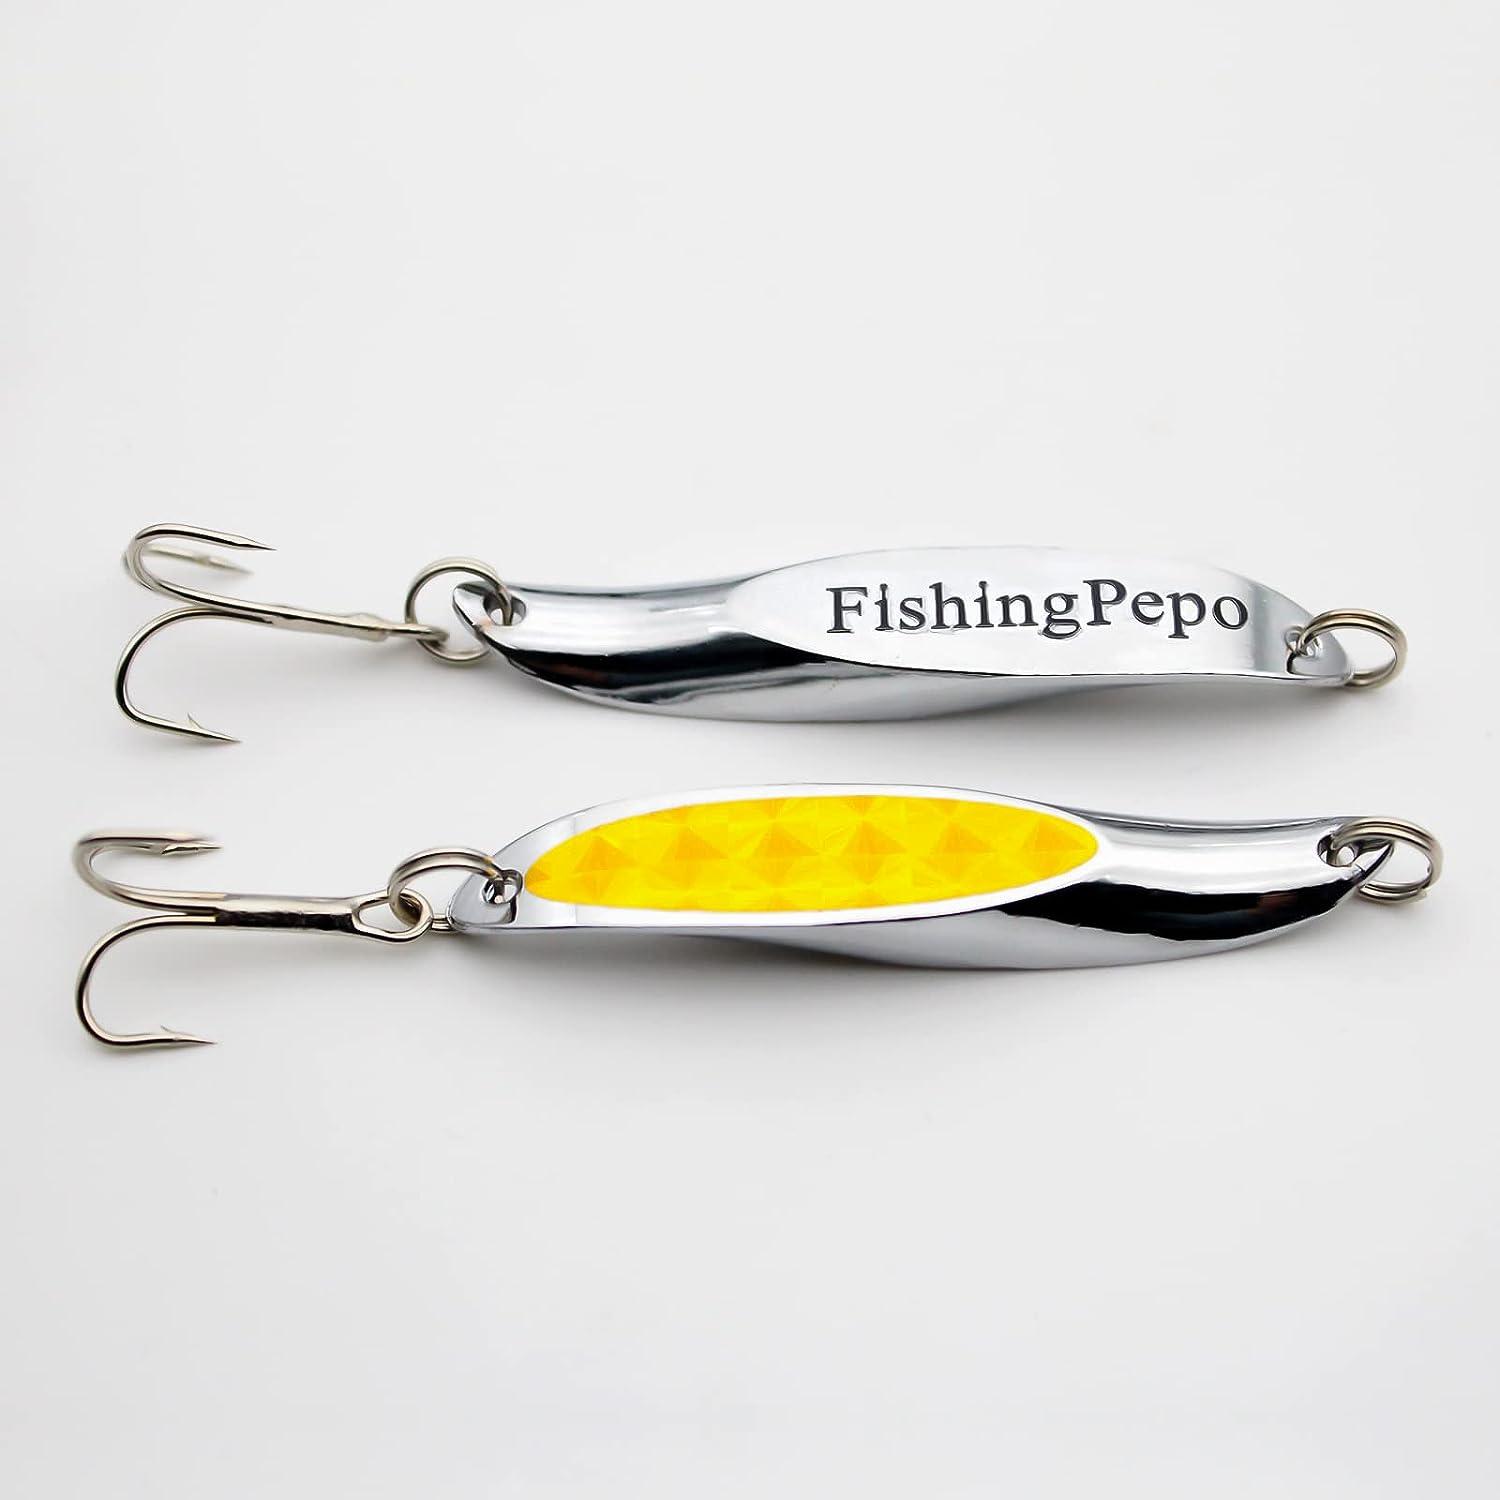 10x Metal Spoon Spinnerbaits Spinner Bait Bass Fishing Lures Kit